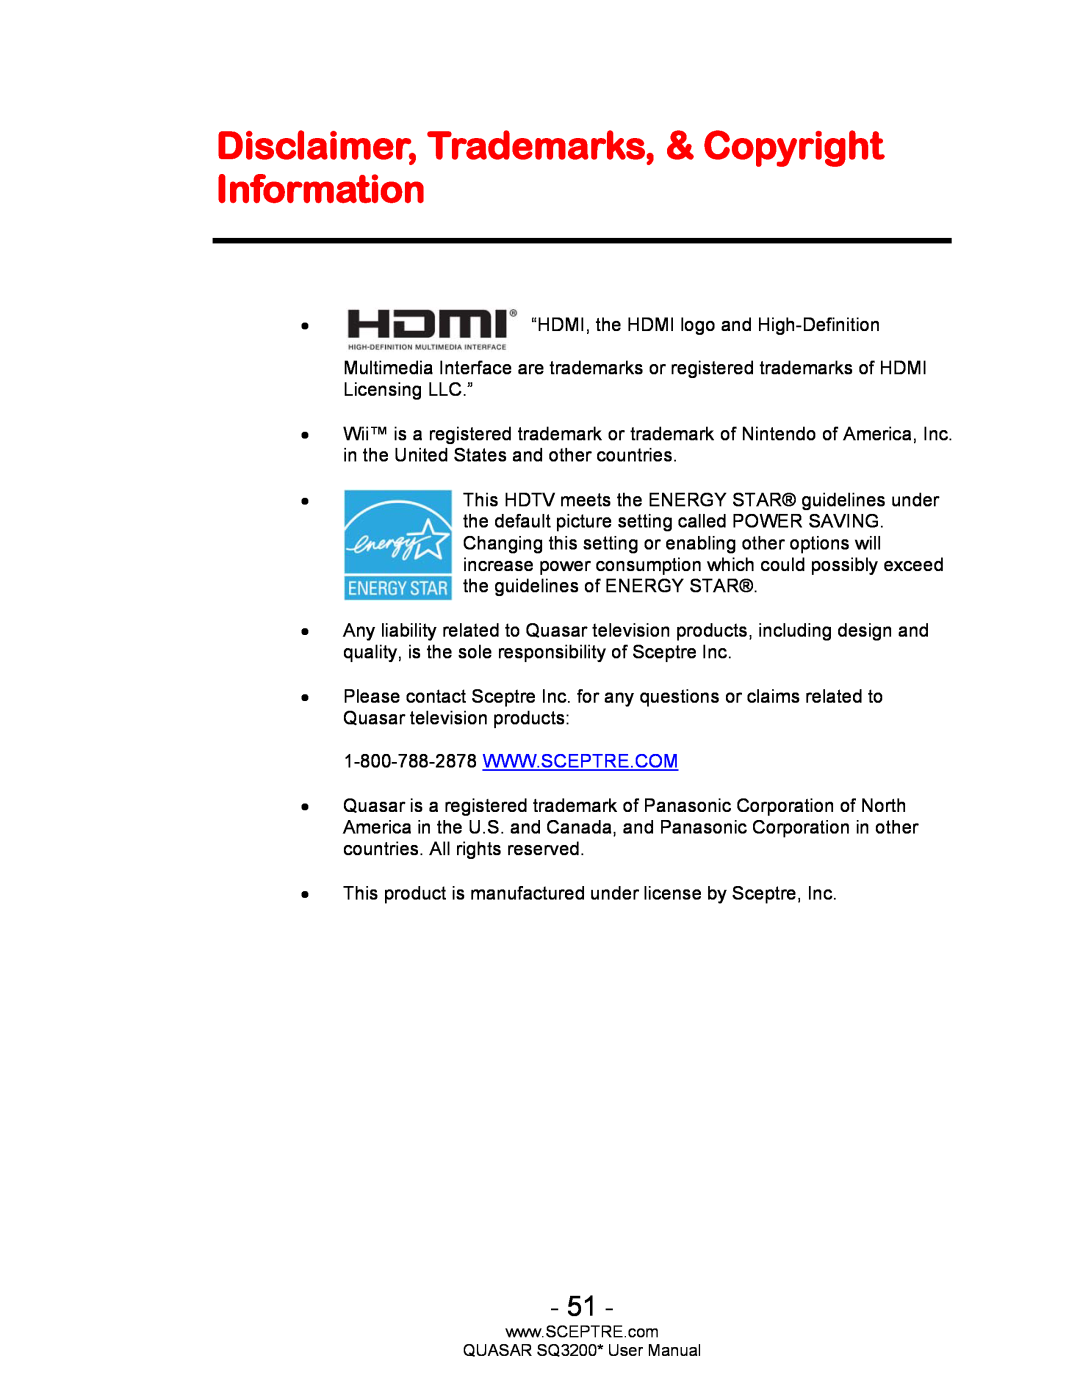 Sceptre Technologies SQ3200, HDTV user manual Disclaimer, Trademarks, & Copyright Information 